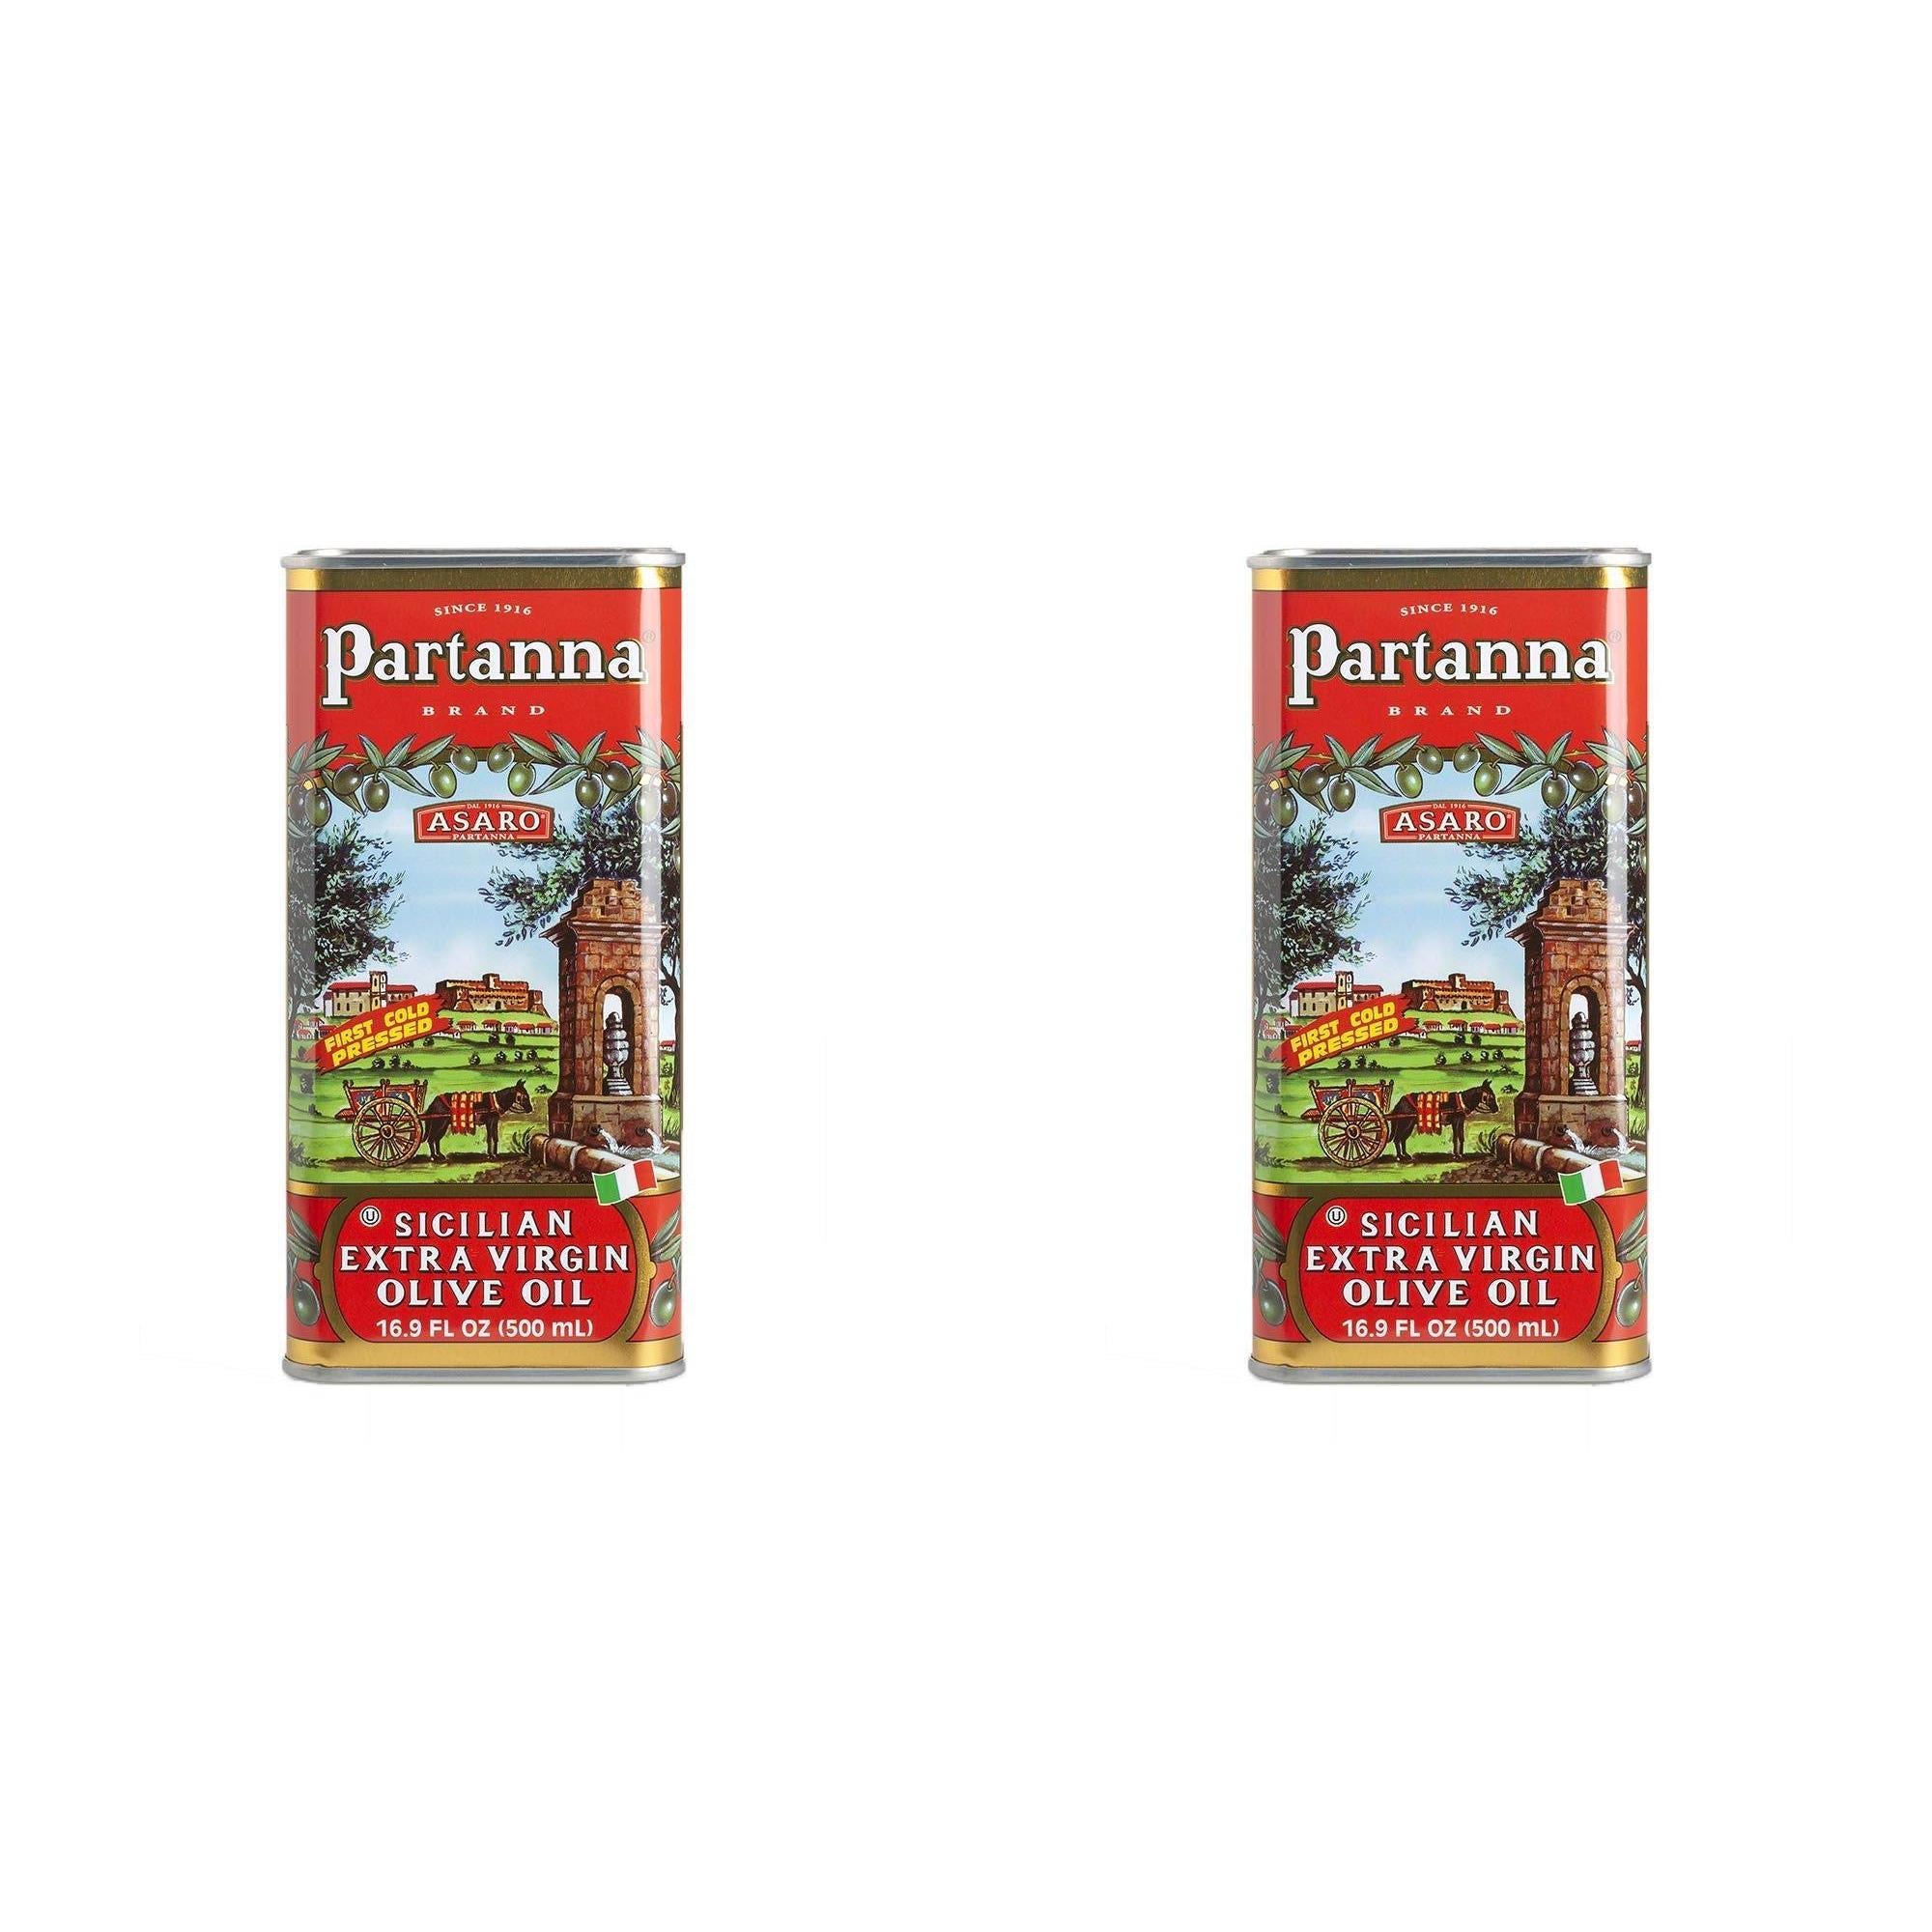 Partanna, Extra Virgin Olive Oil Tin, 16.9 Fl Oz Pack of 2